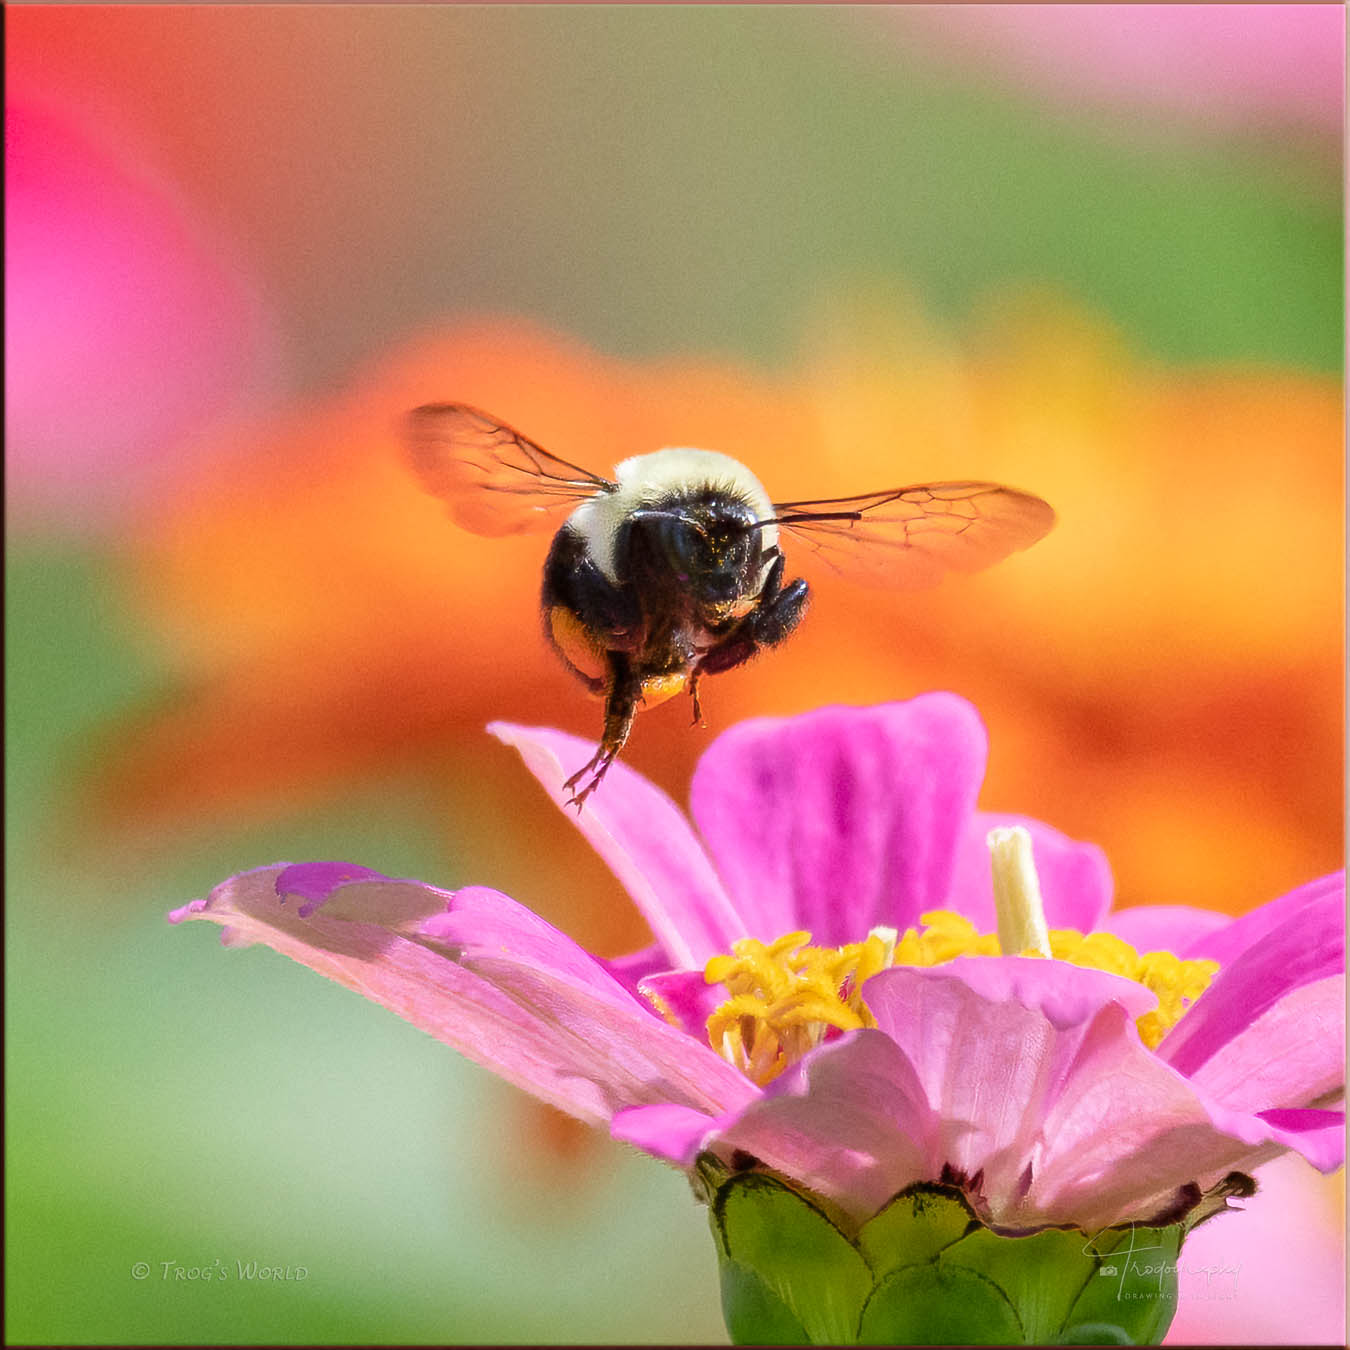 Bumblebee in flight over the flowers